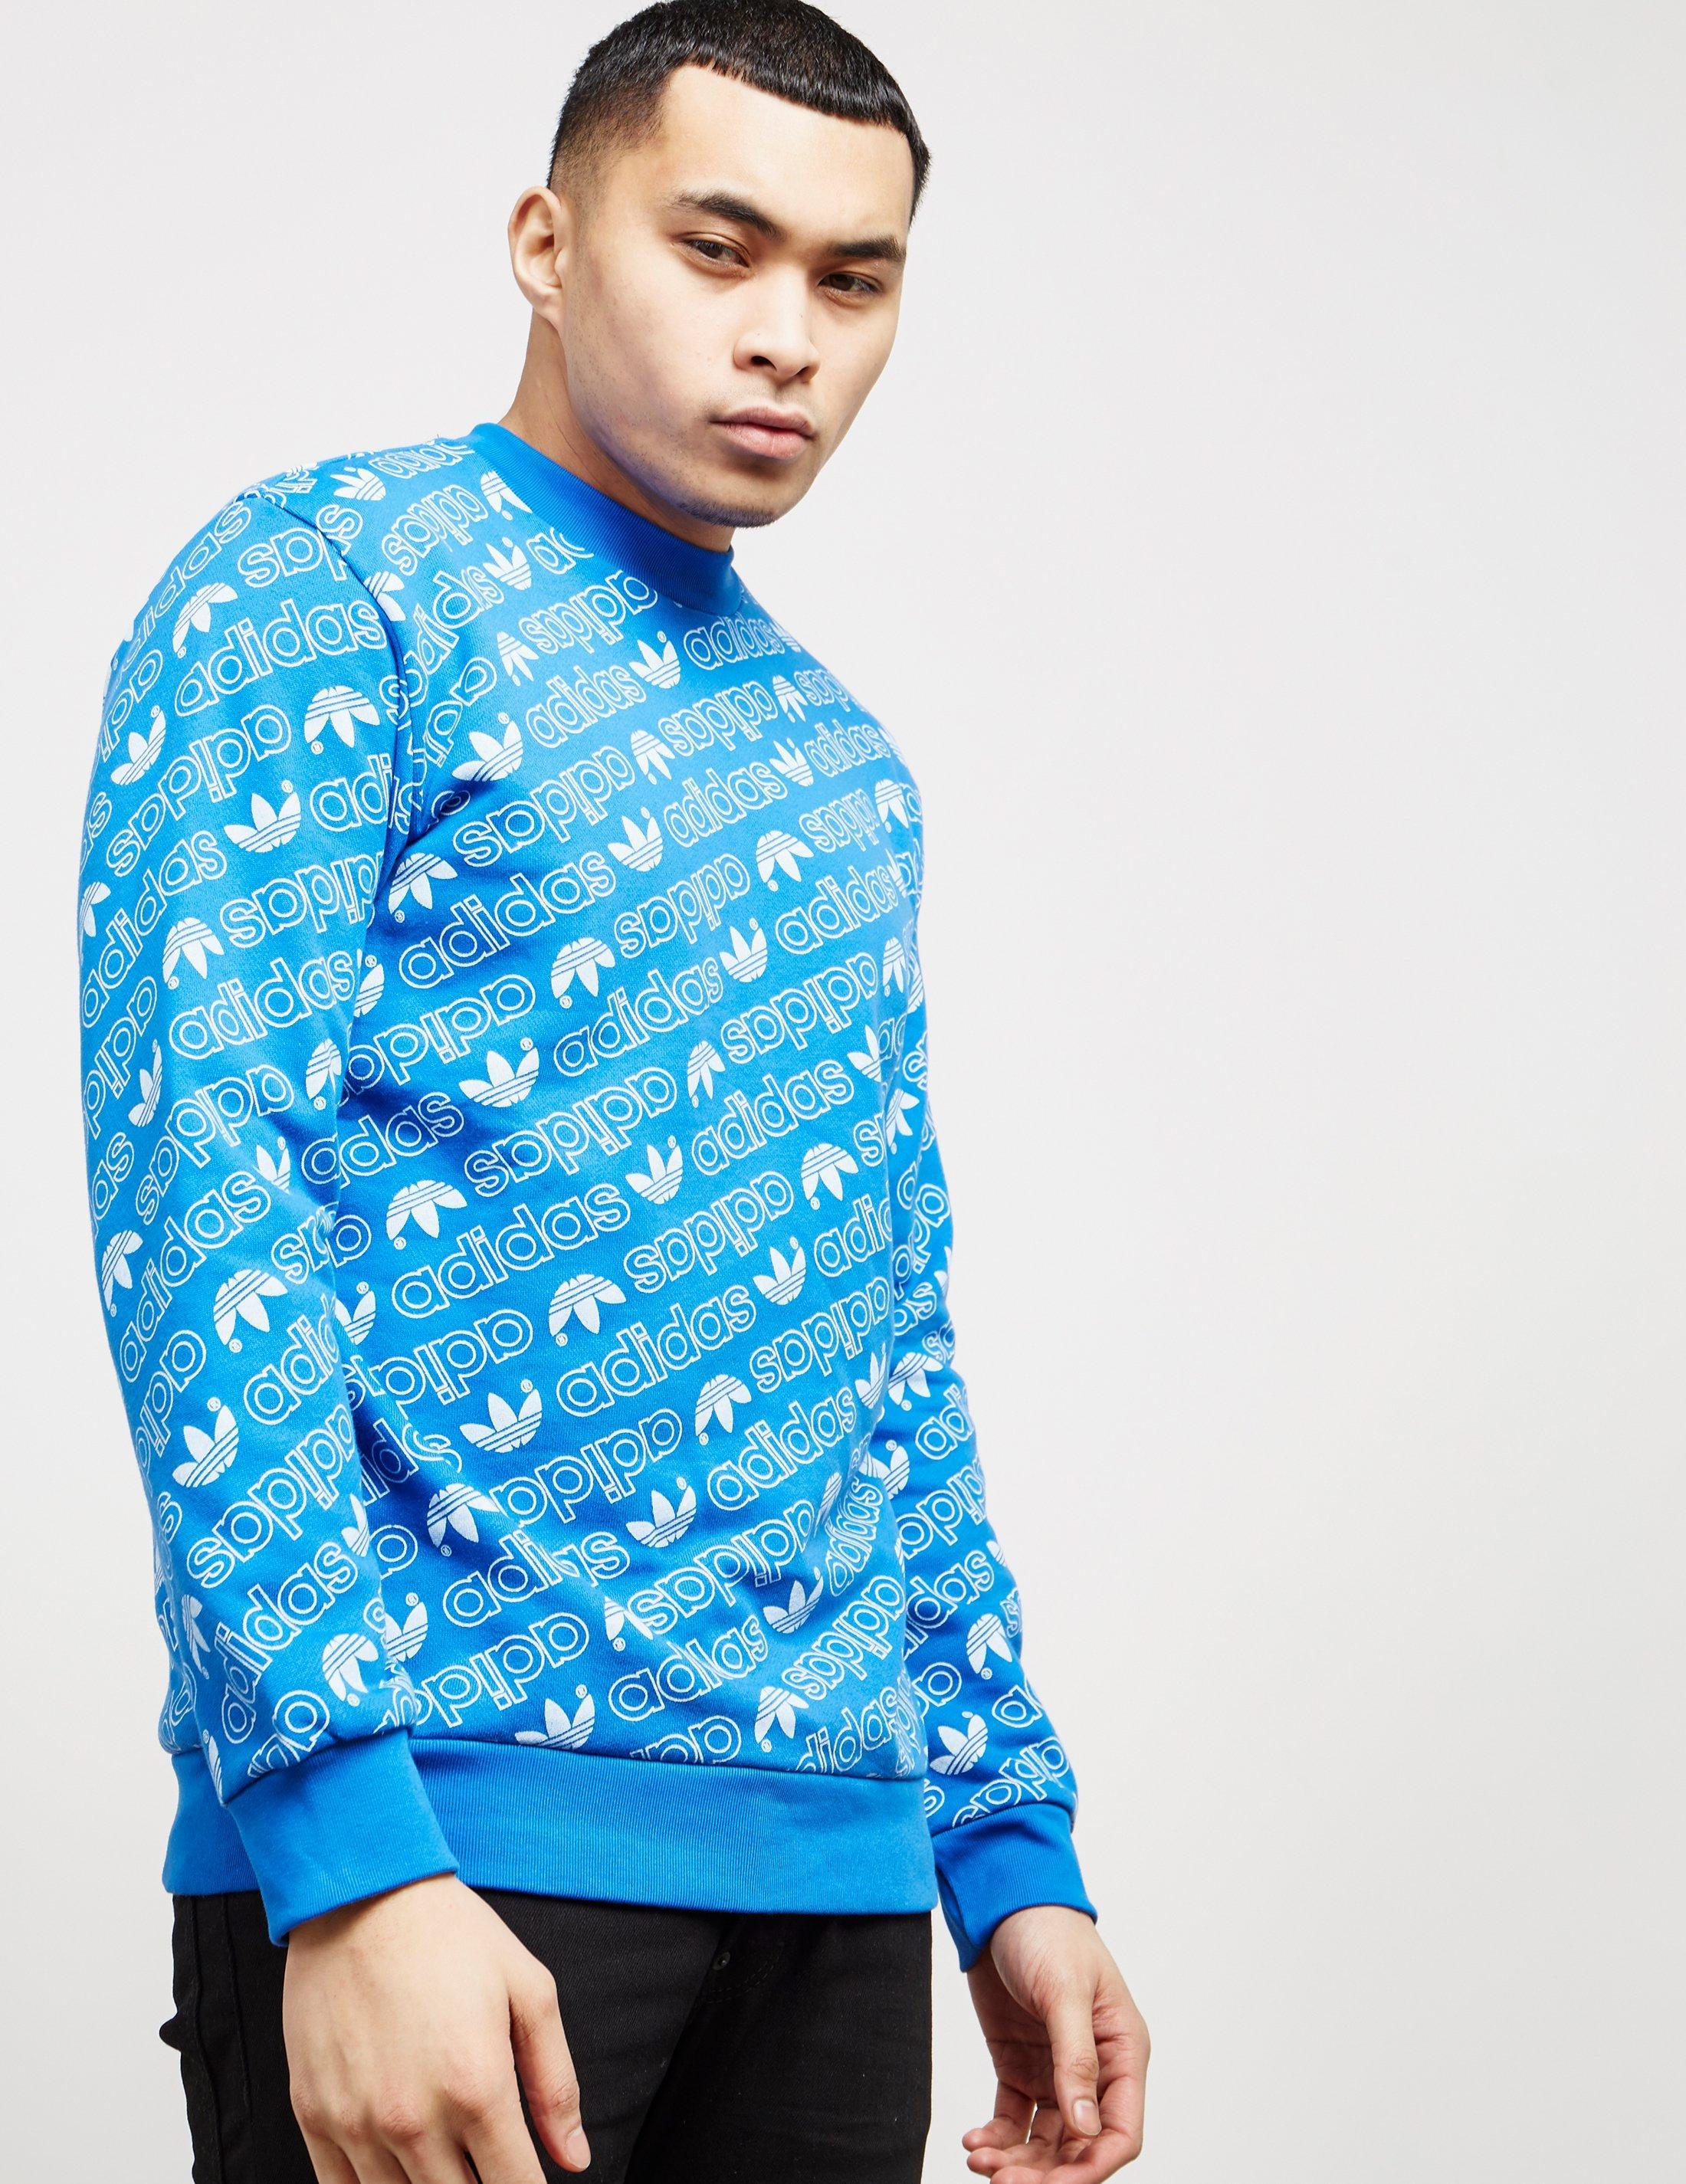 Adidas All Over Print Sweatshirt new Zealand, SAVE 57% - mpgc.net